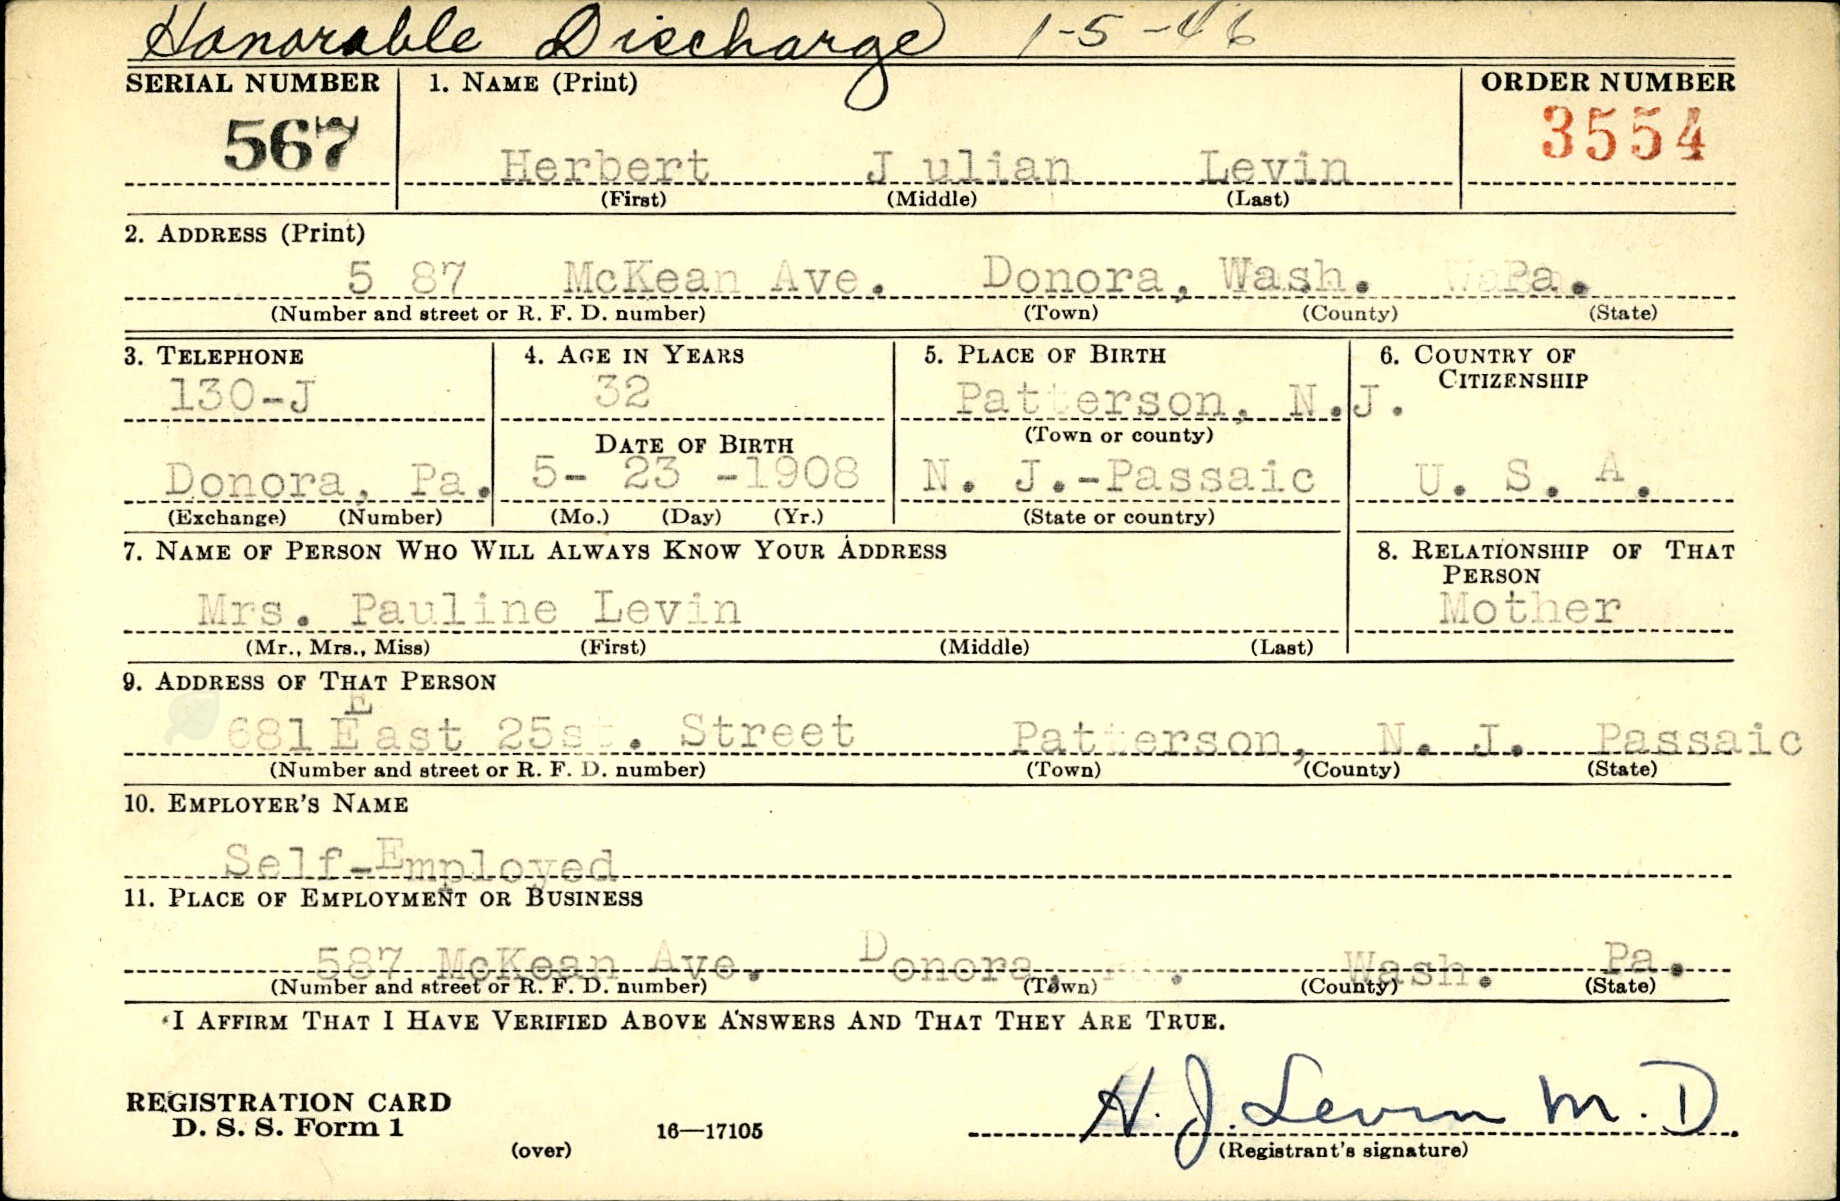 Herbert Levin's draft registration from October 1940, front